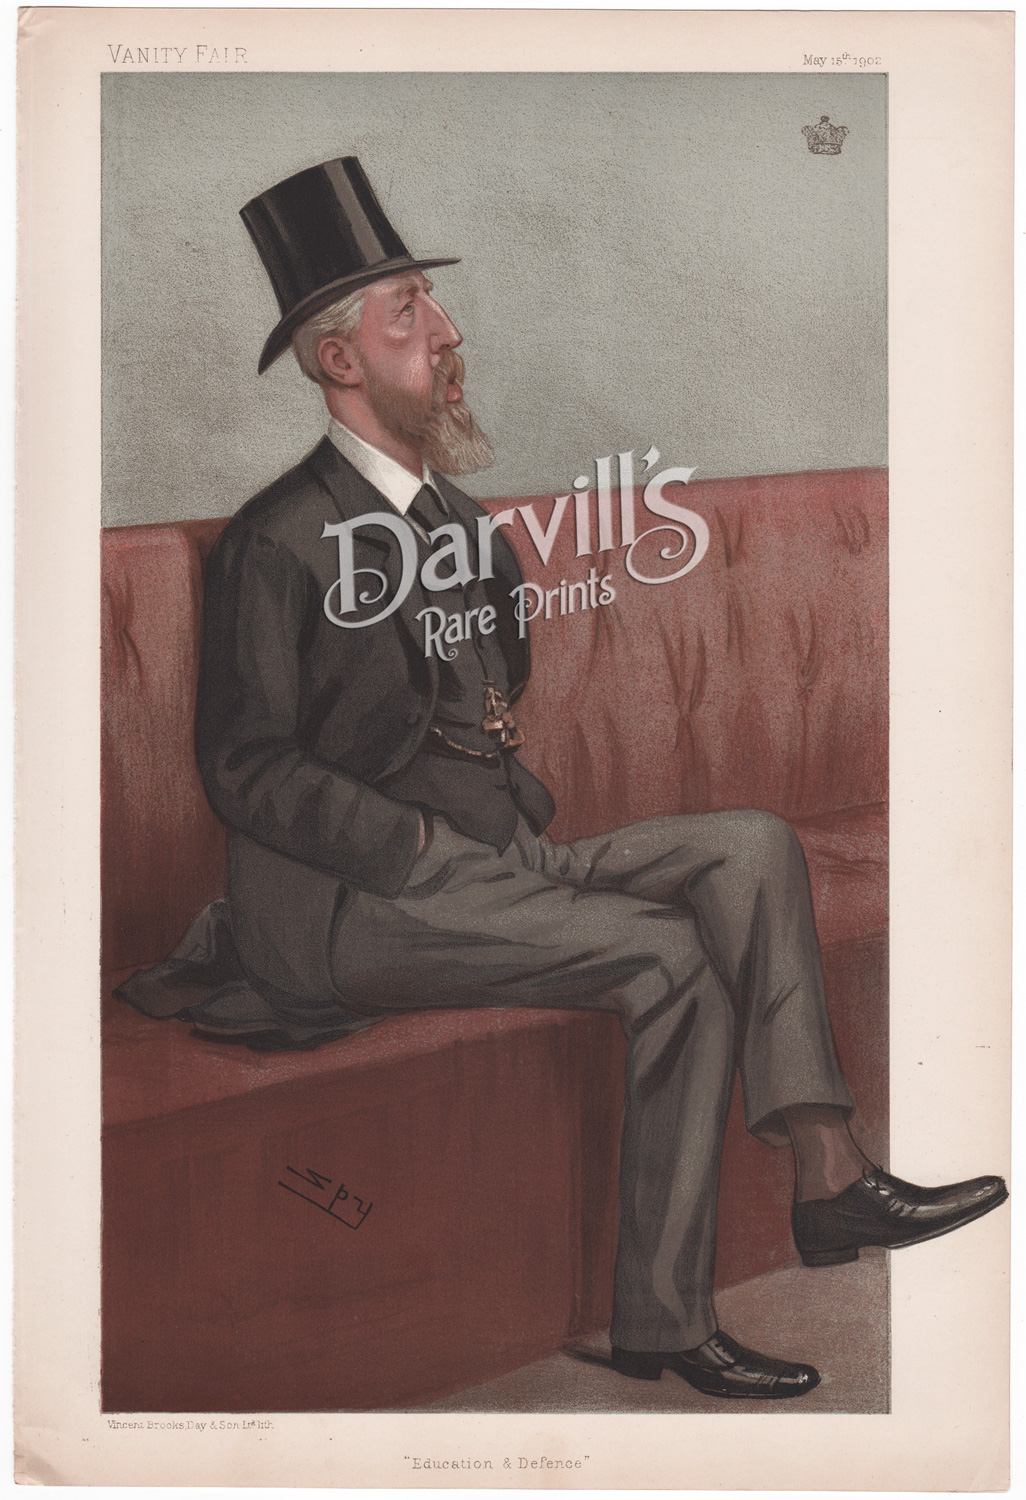 The Duke of Devonshire May 15 1902